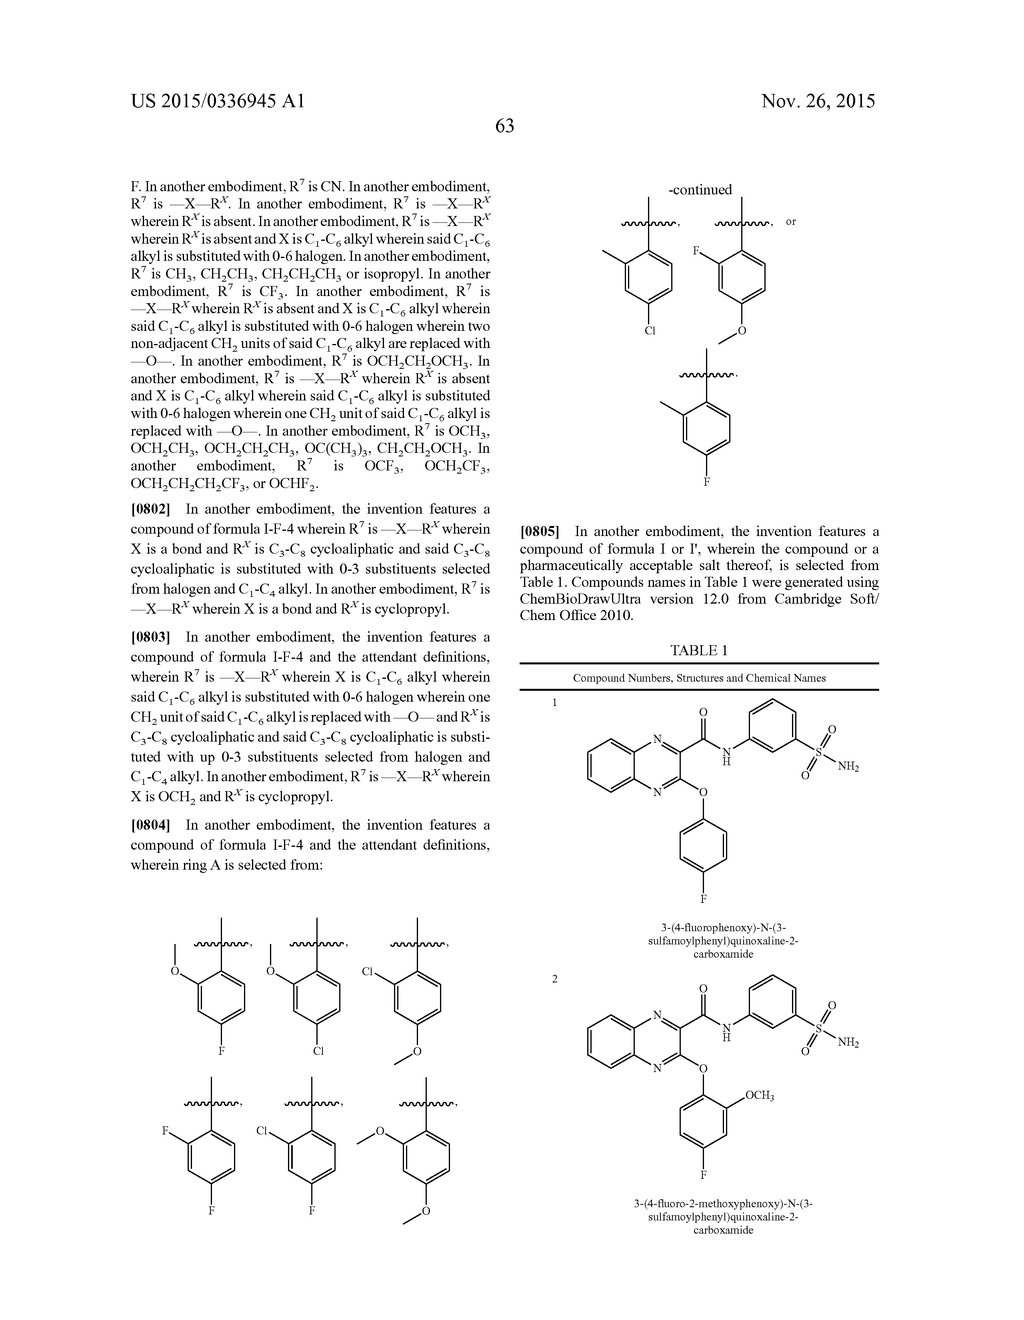 QUINOLINE AND QUINAZOLINE AMIDES AS MODULATORS OF SODIUM CHANNELS - diagram, schematic, and image 64